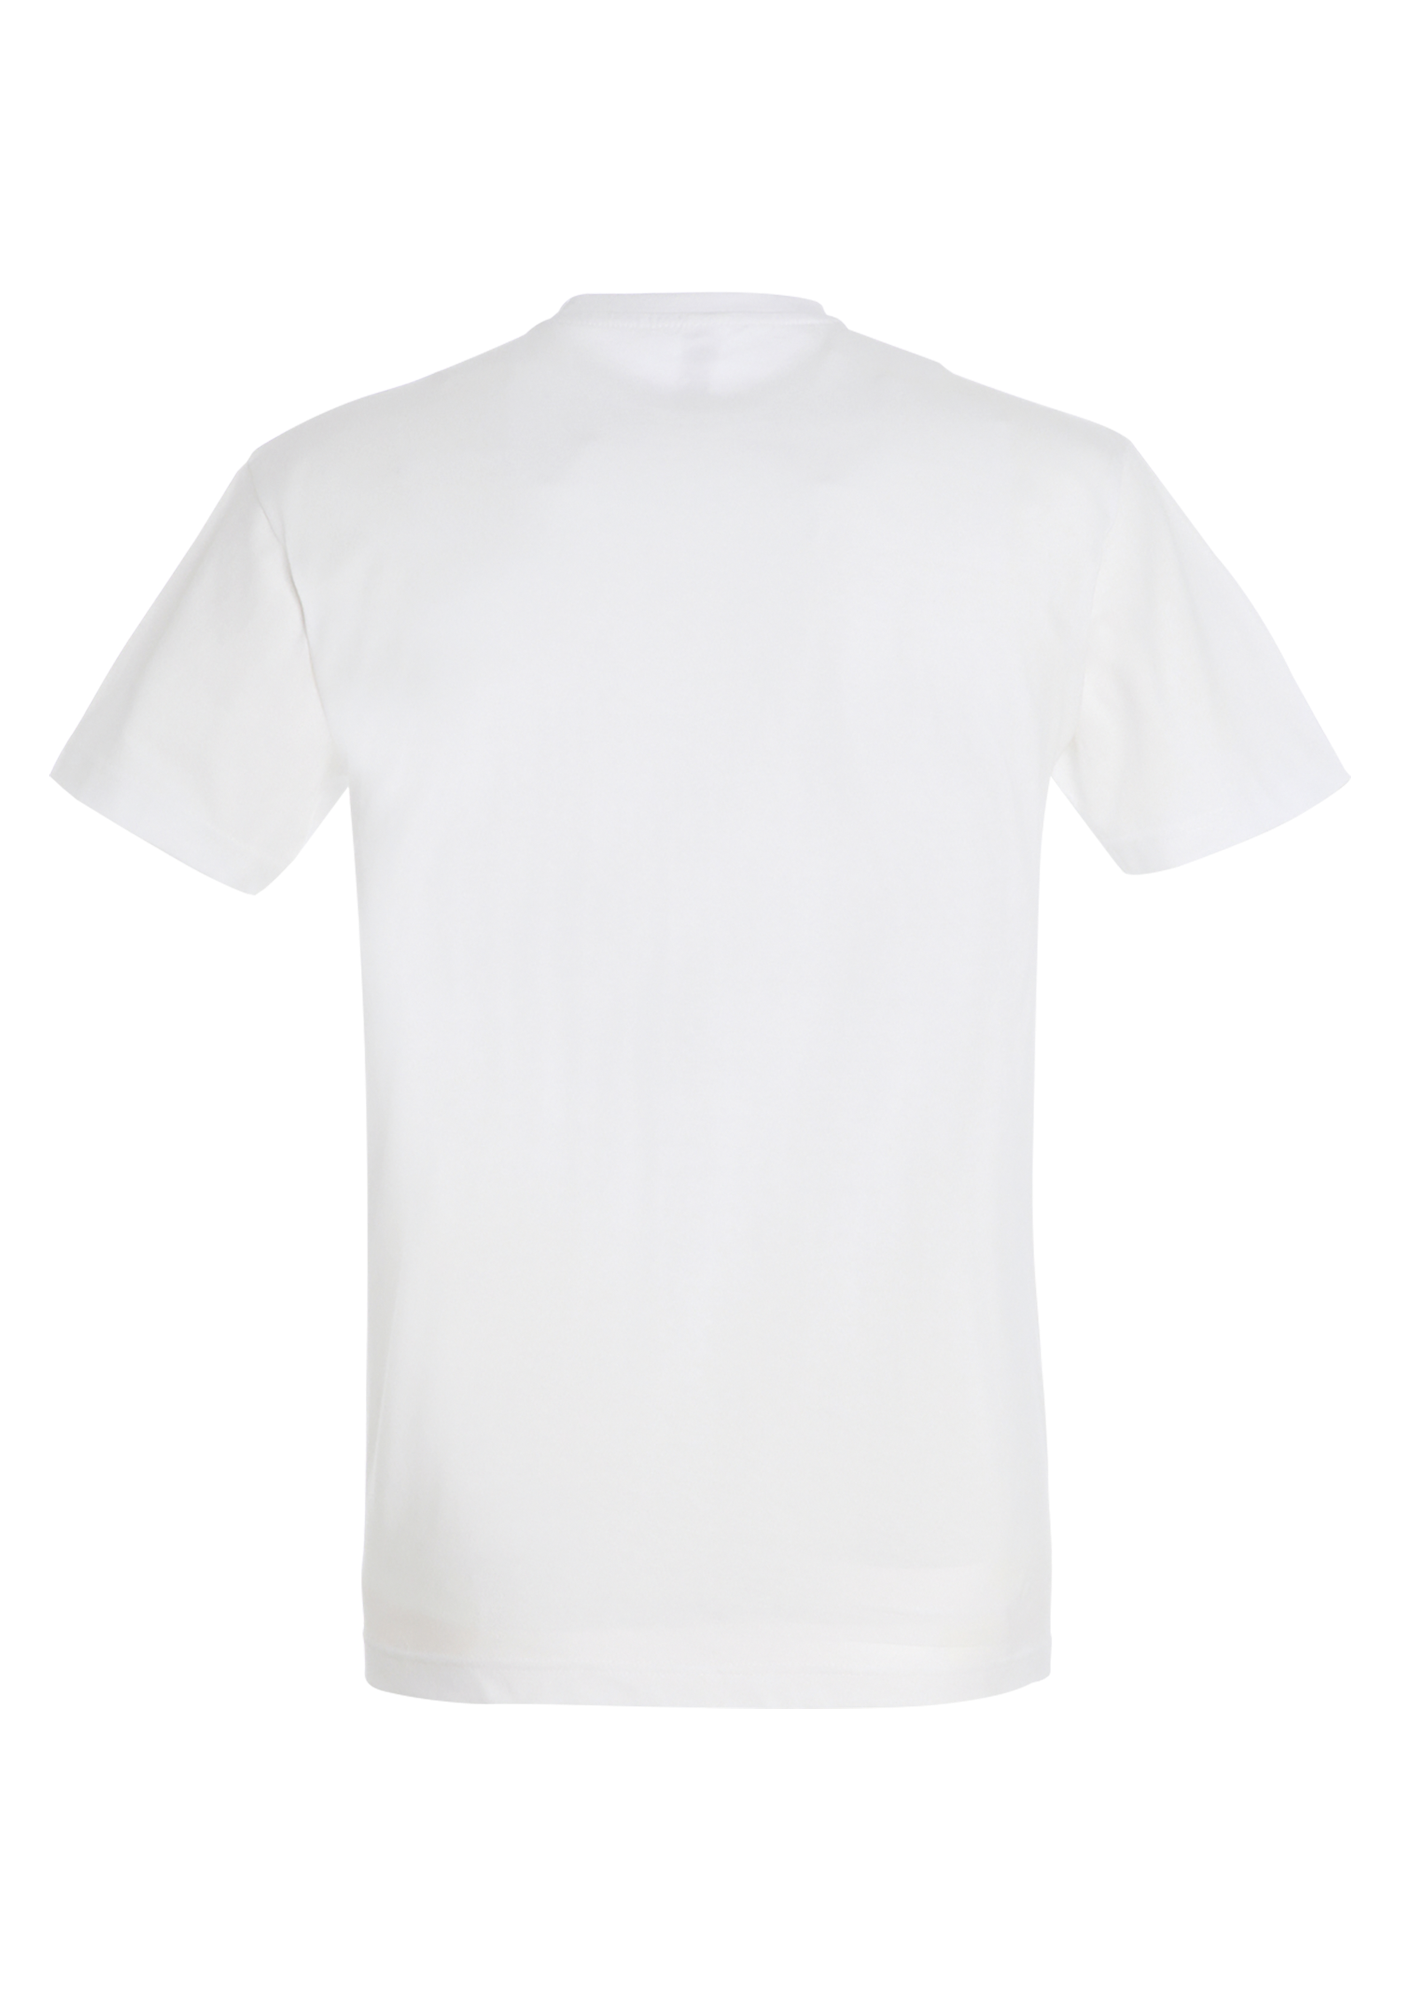 T-shirt Adulte premium navy stars blanc - IMPERIAL-ADULTEDOSBLANC